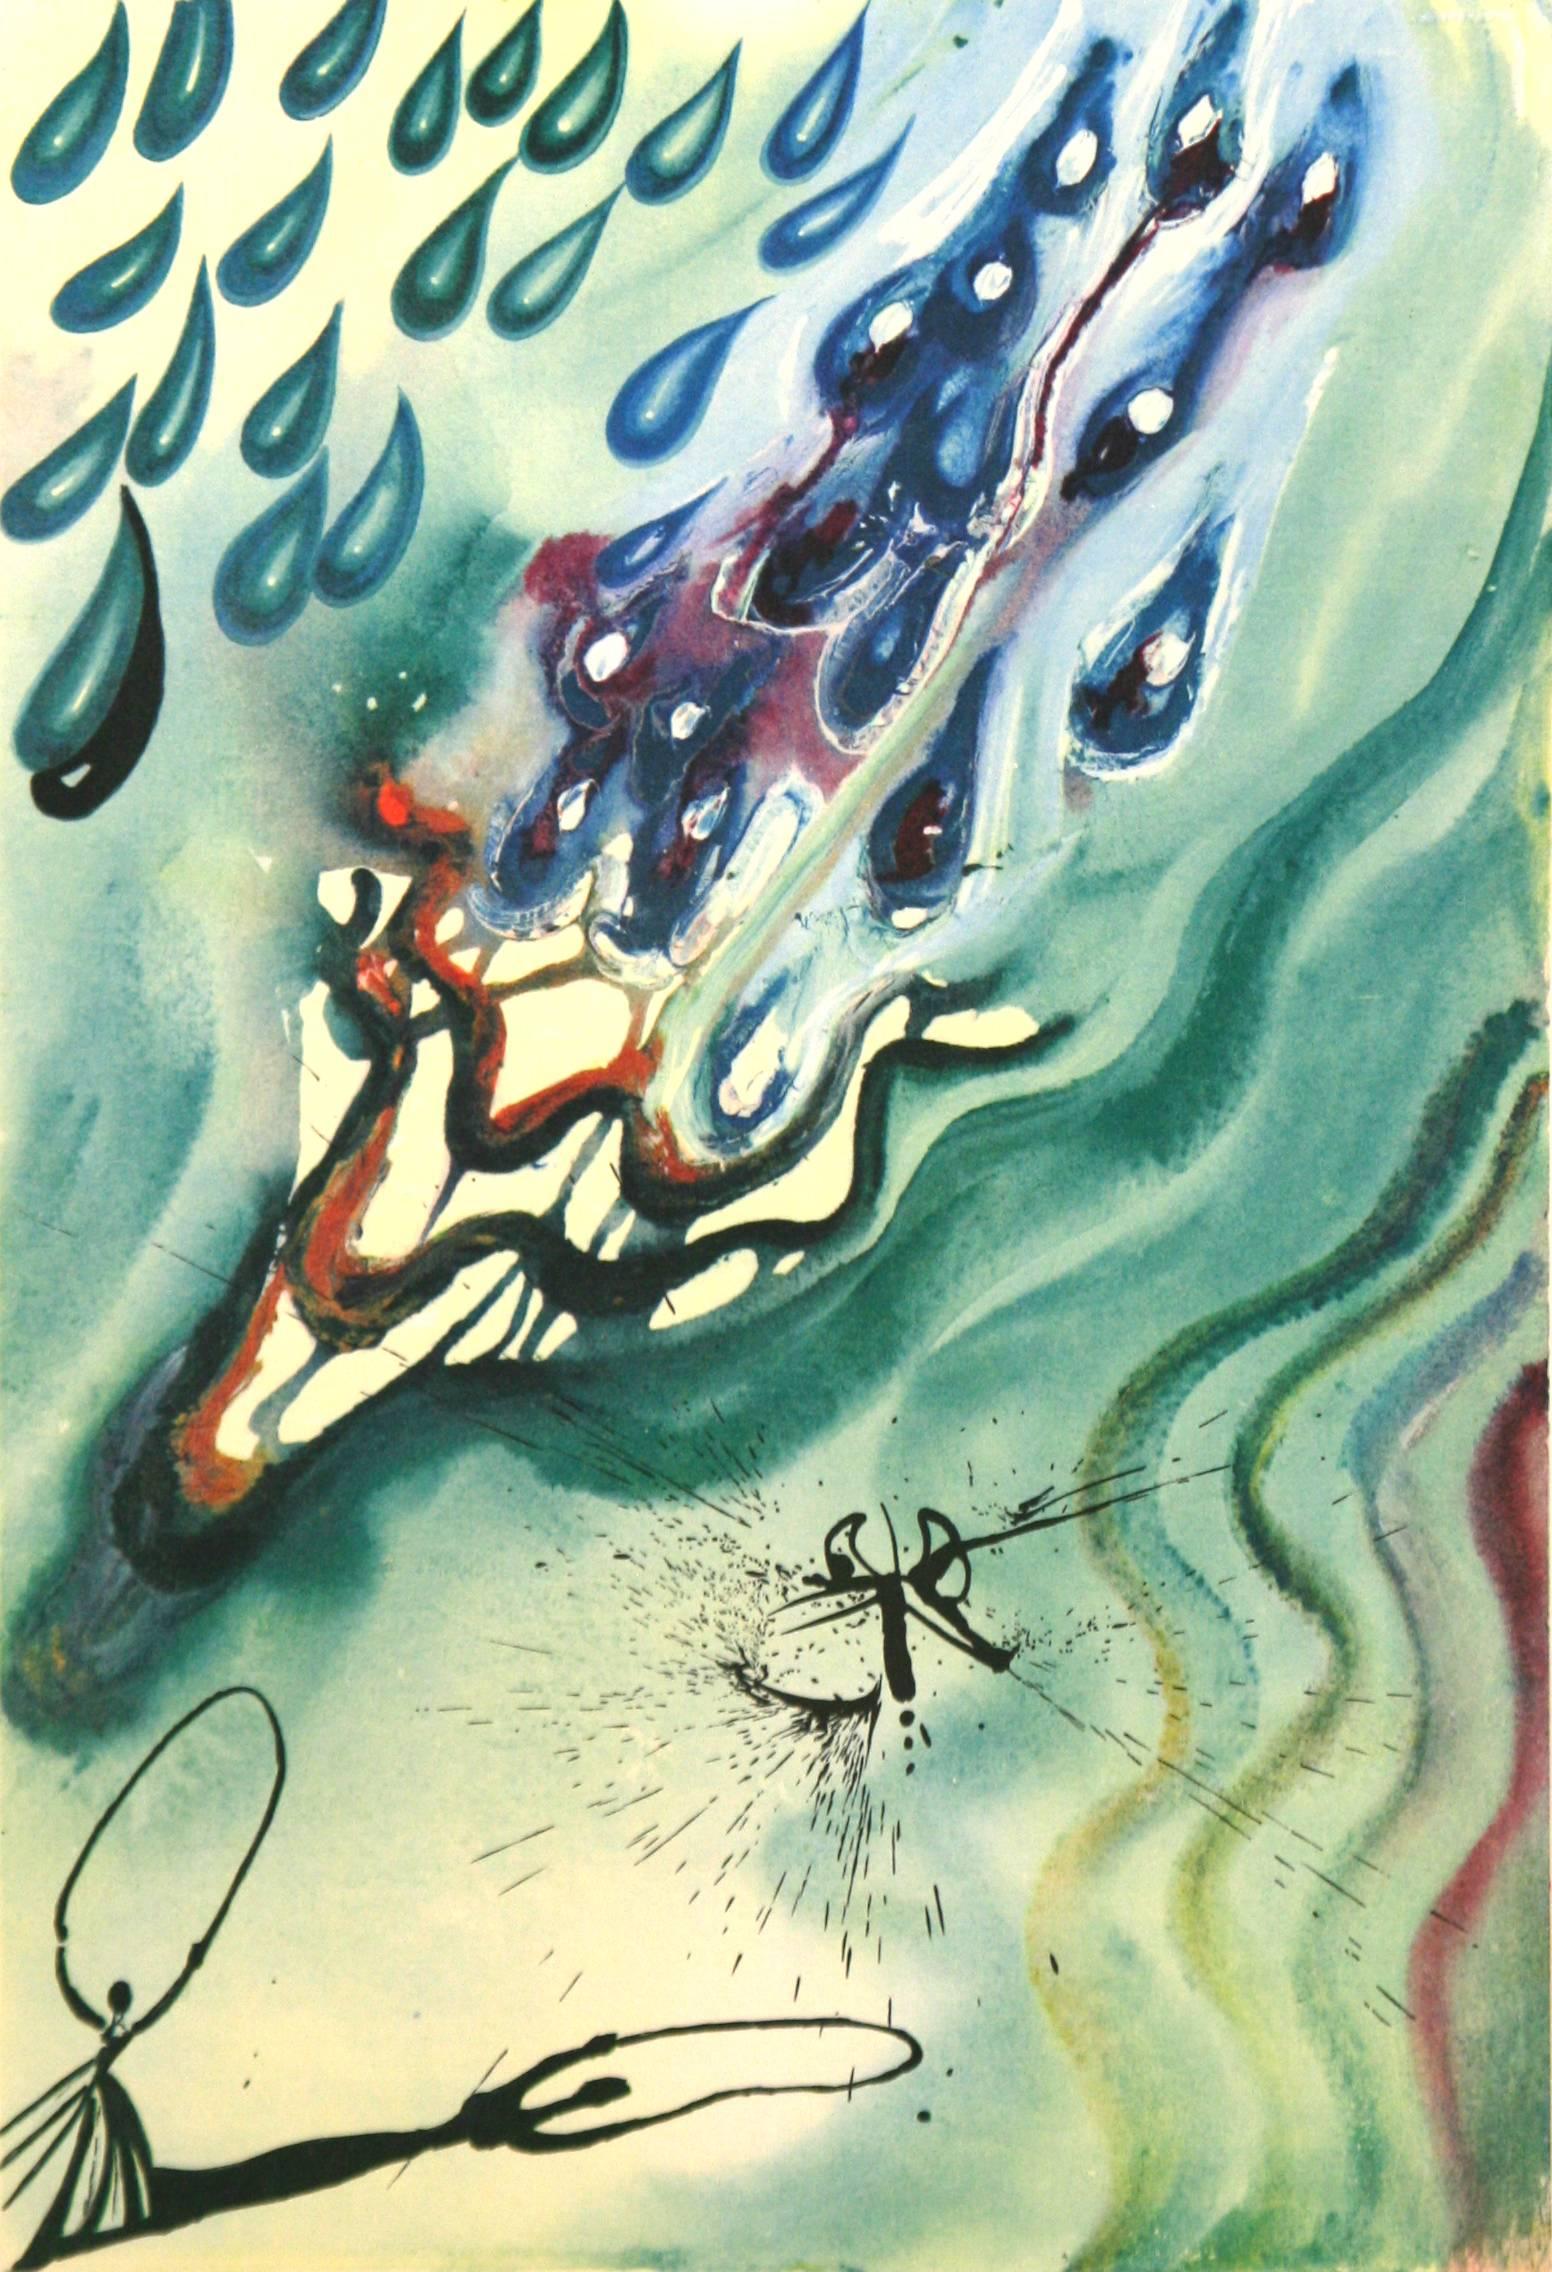 Salvador Dalí Abstract Print - Pool of Tears Alice in Wonderland Salvador Dali 1969 original woodblock print